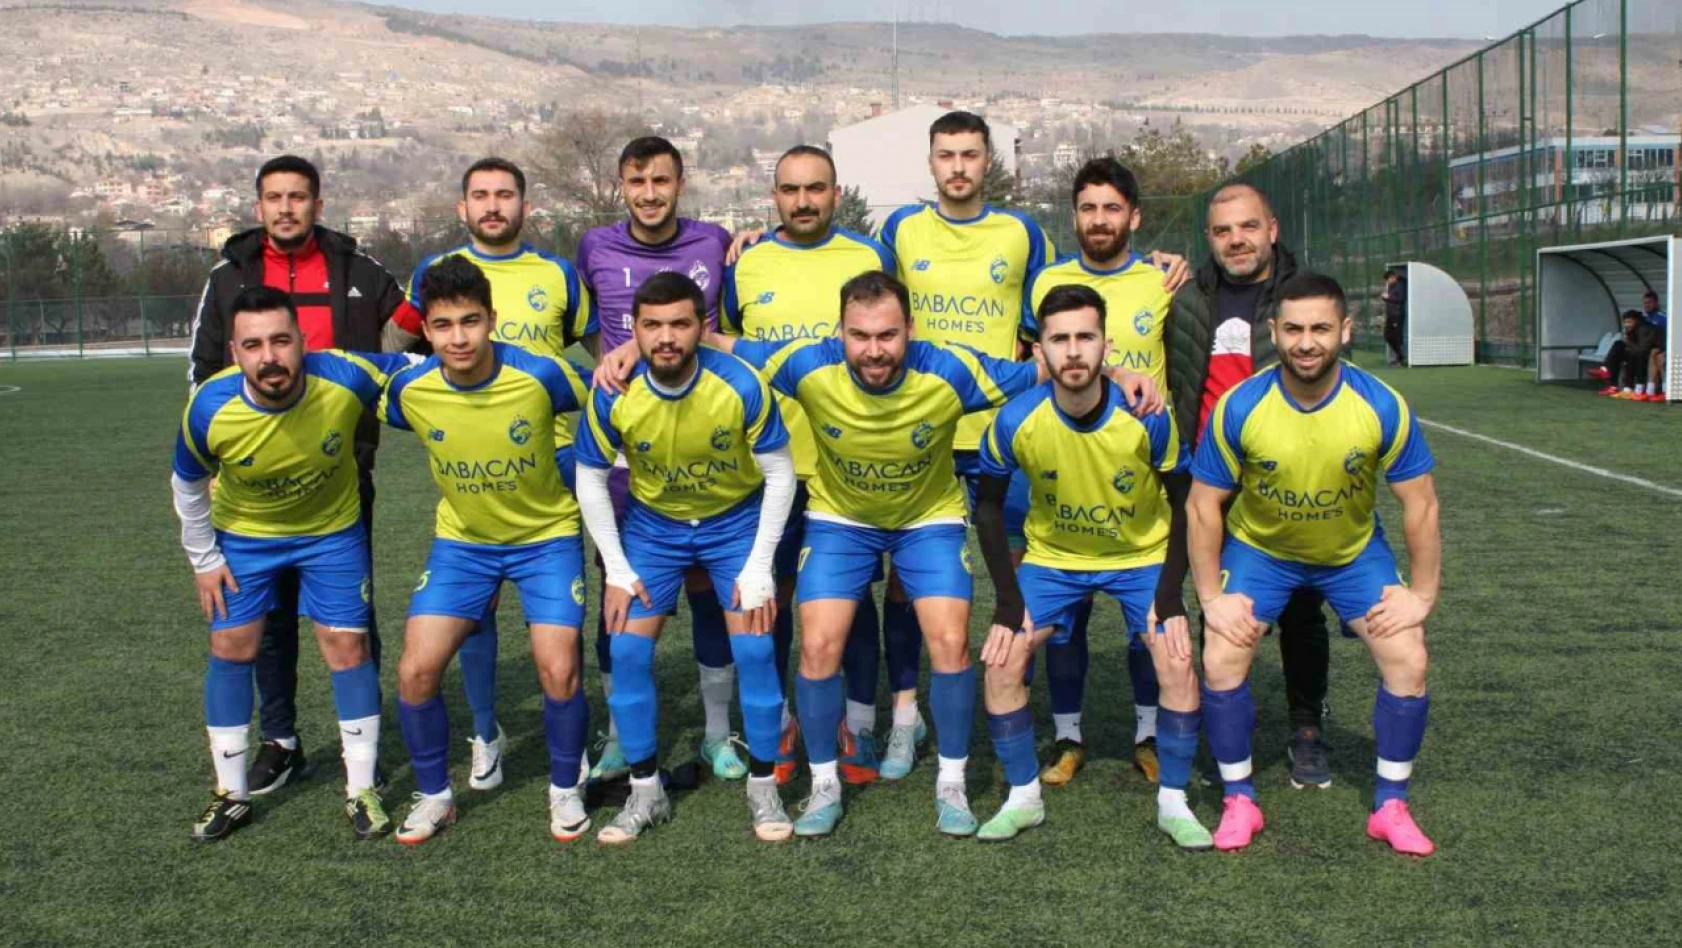 Cuma Uluçay Talasspor Play-Off İddiasını Sürdürüyor